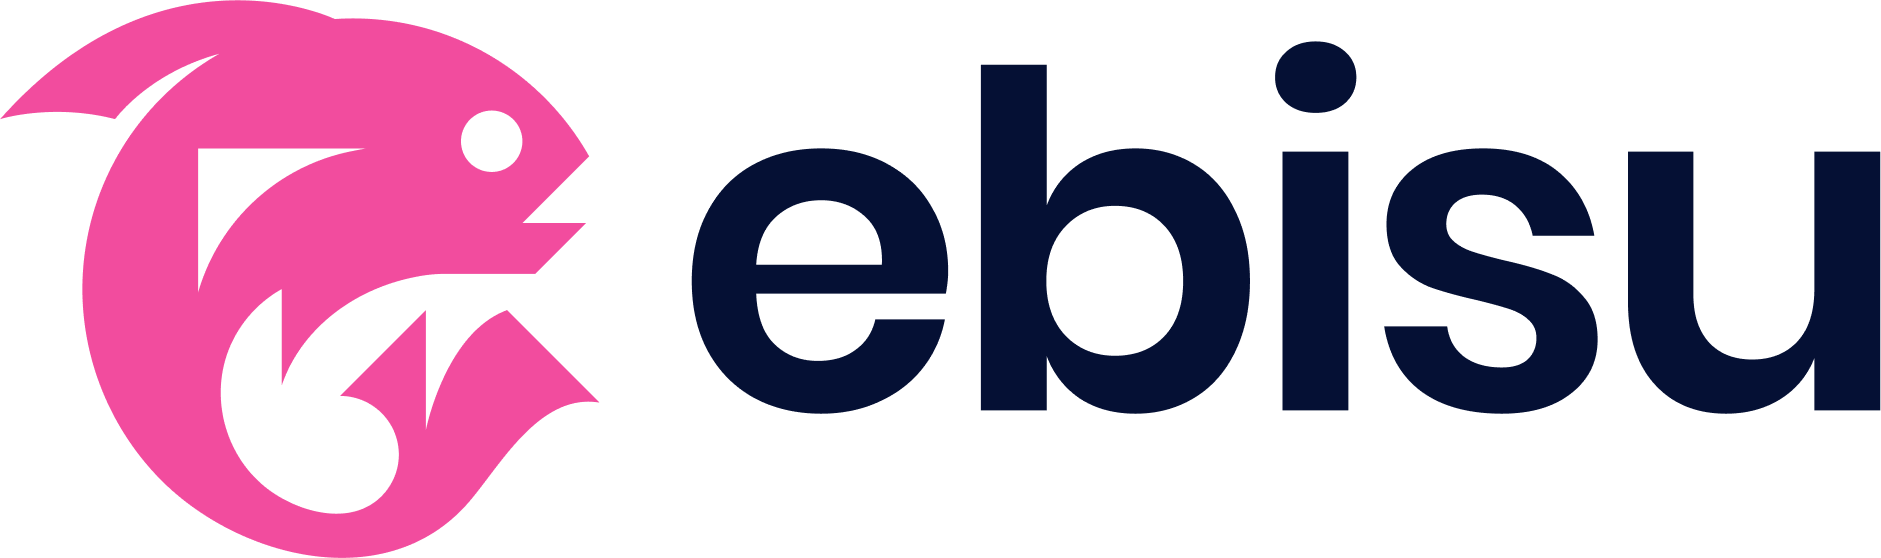 Ebisu logo